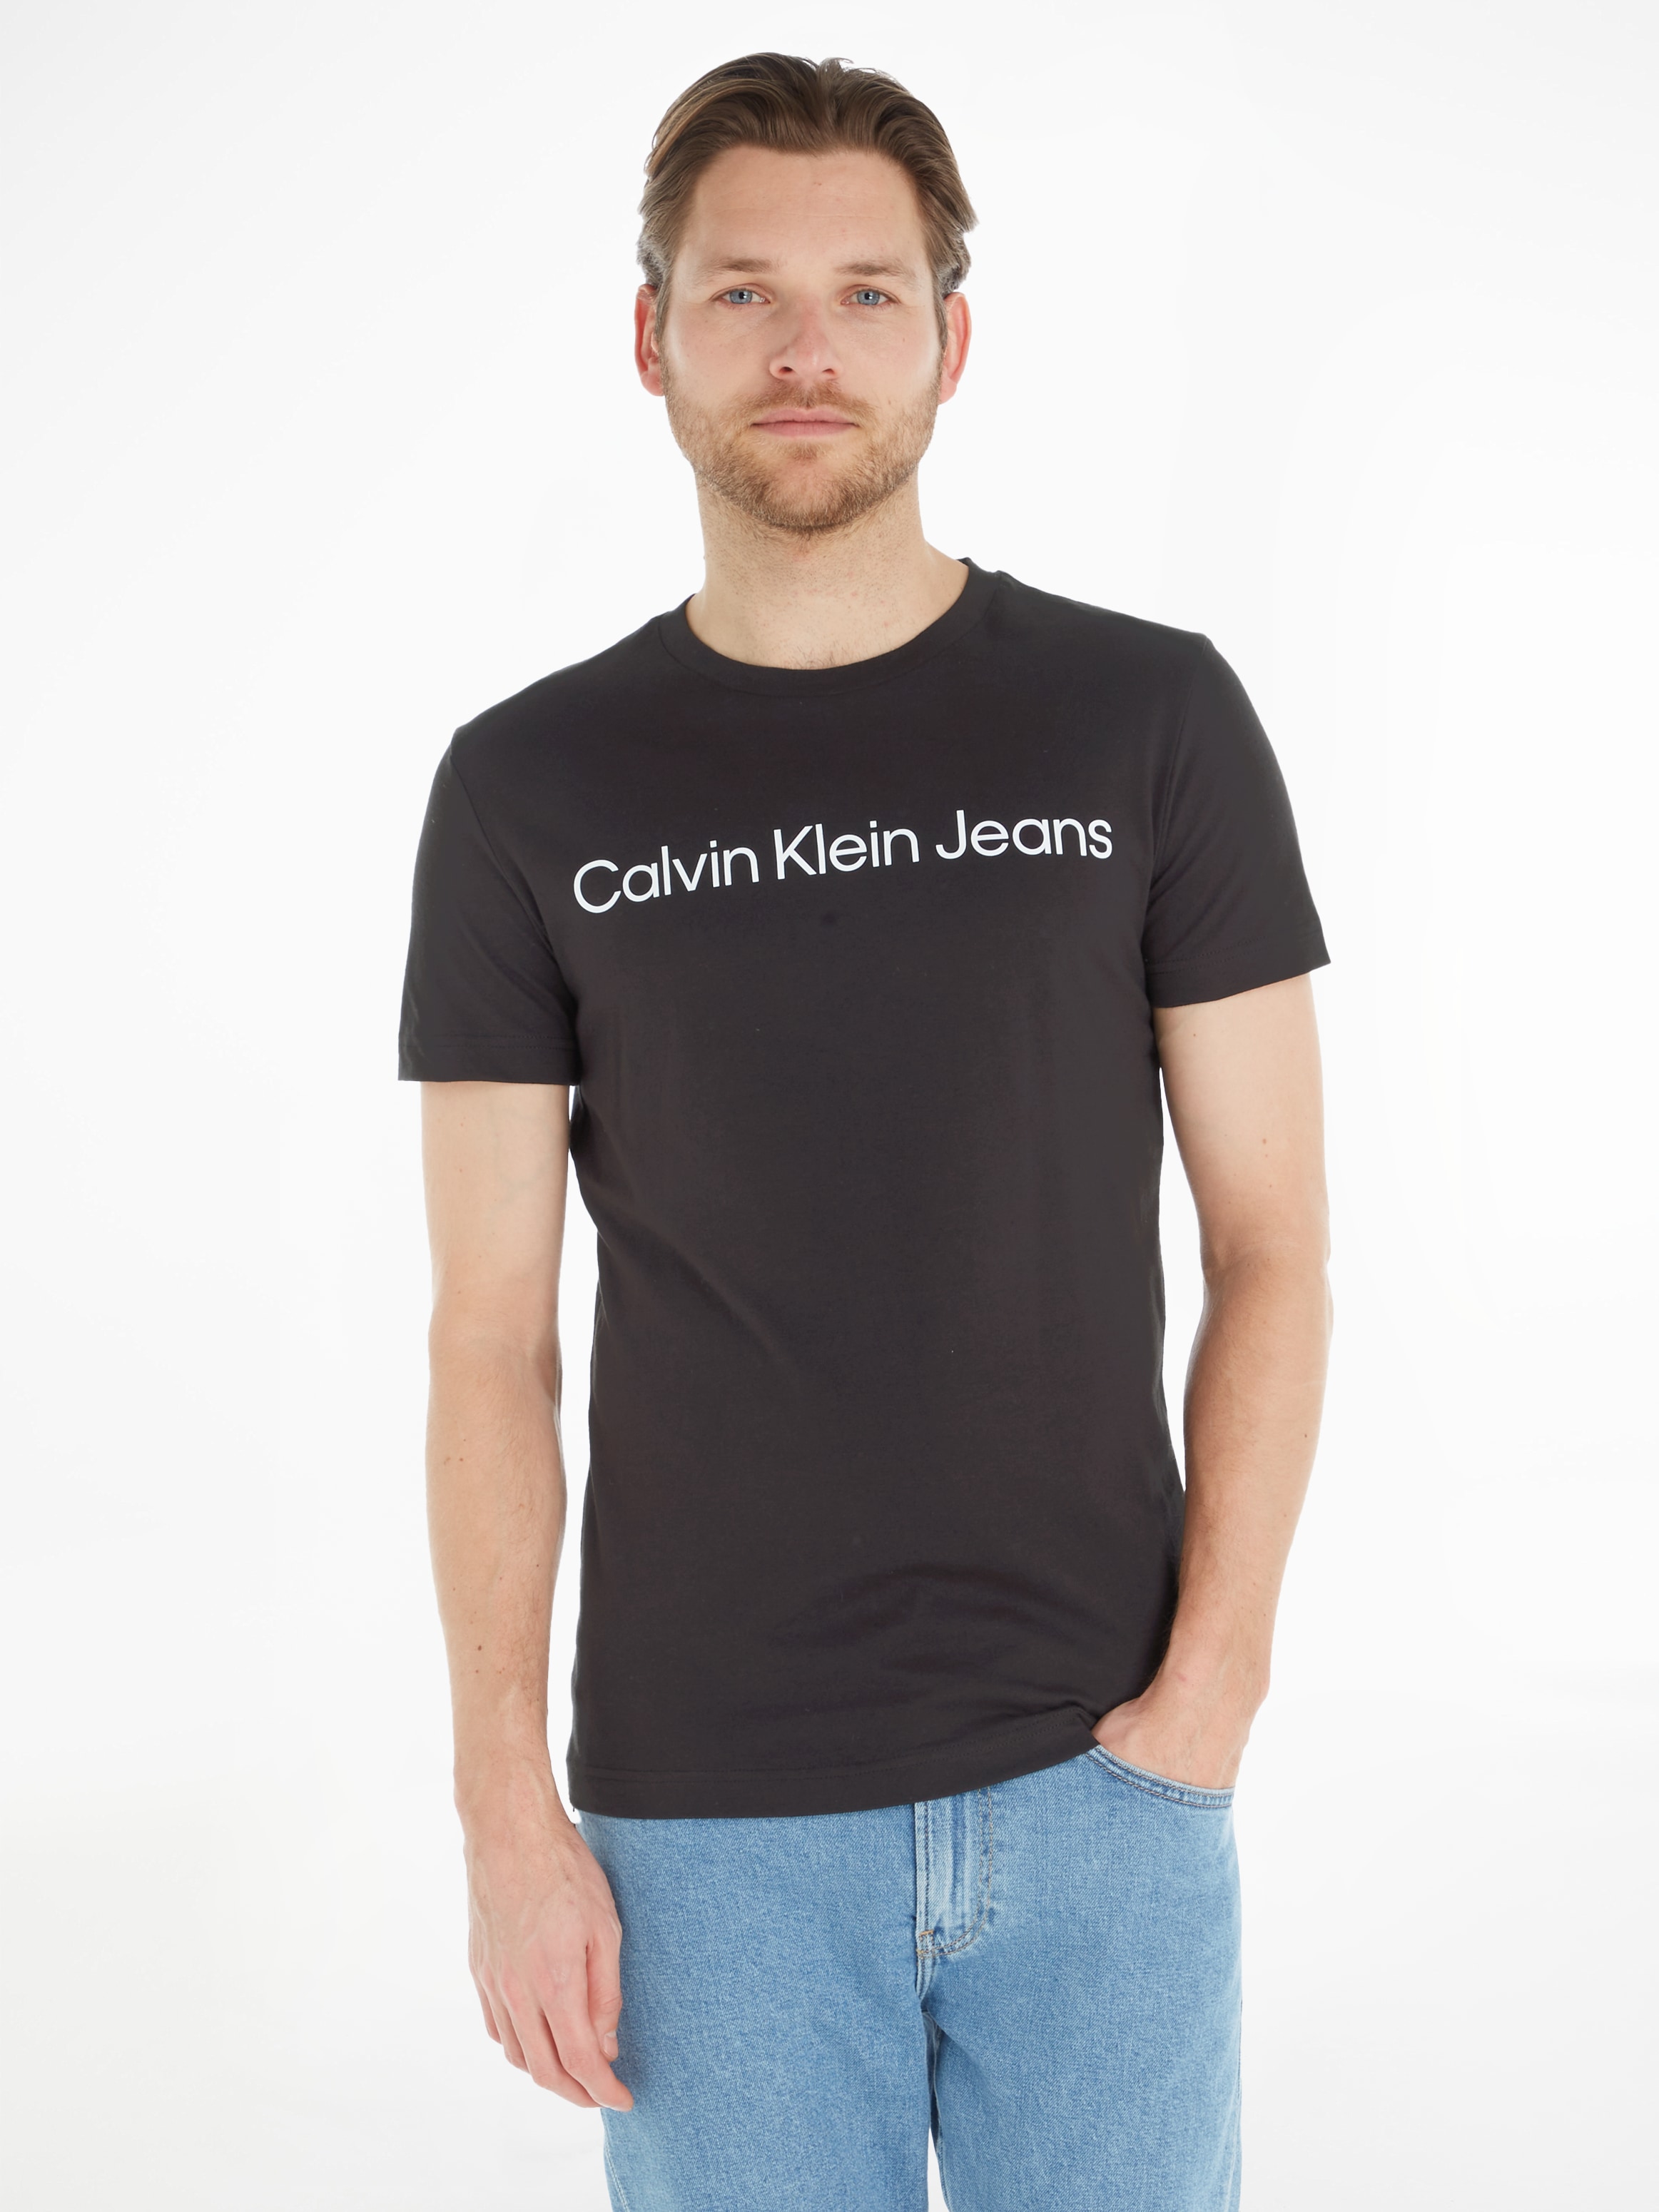 INSTITUTIONAL Jeans bei TEE« T-Shirt ♕ LOGO SLIM Klein »CORE Calvin